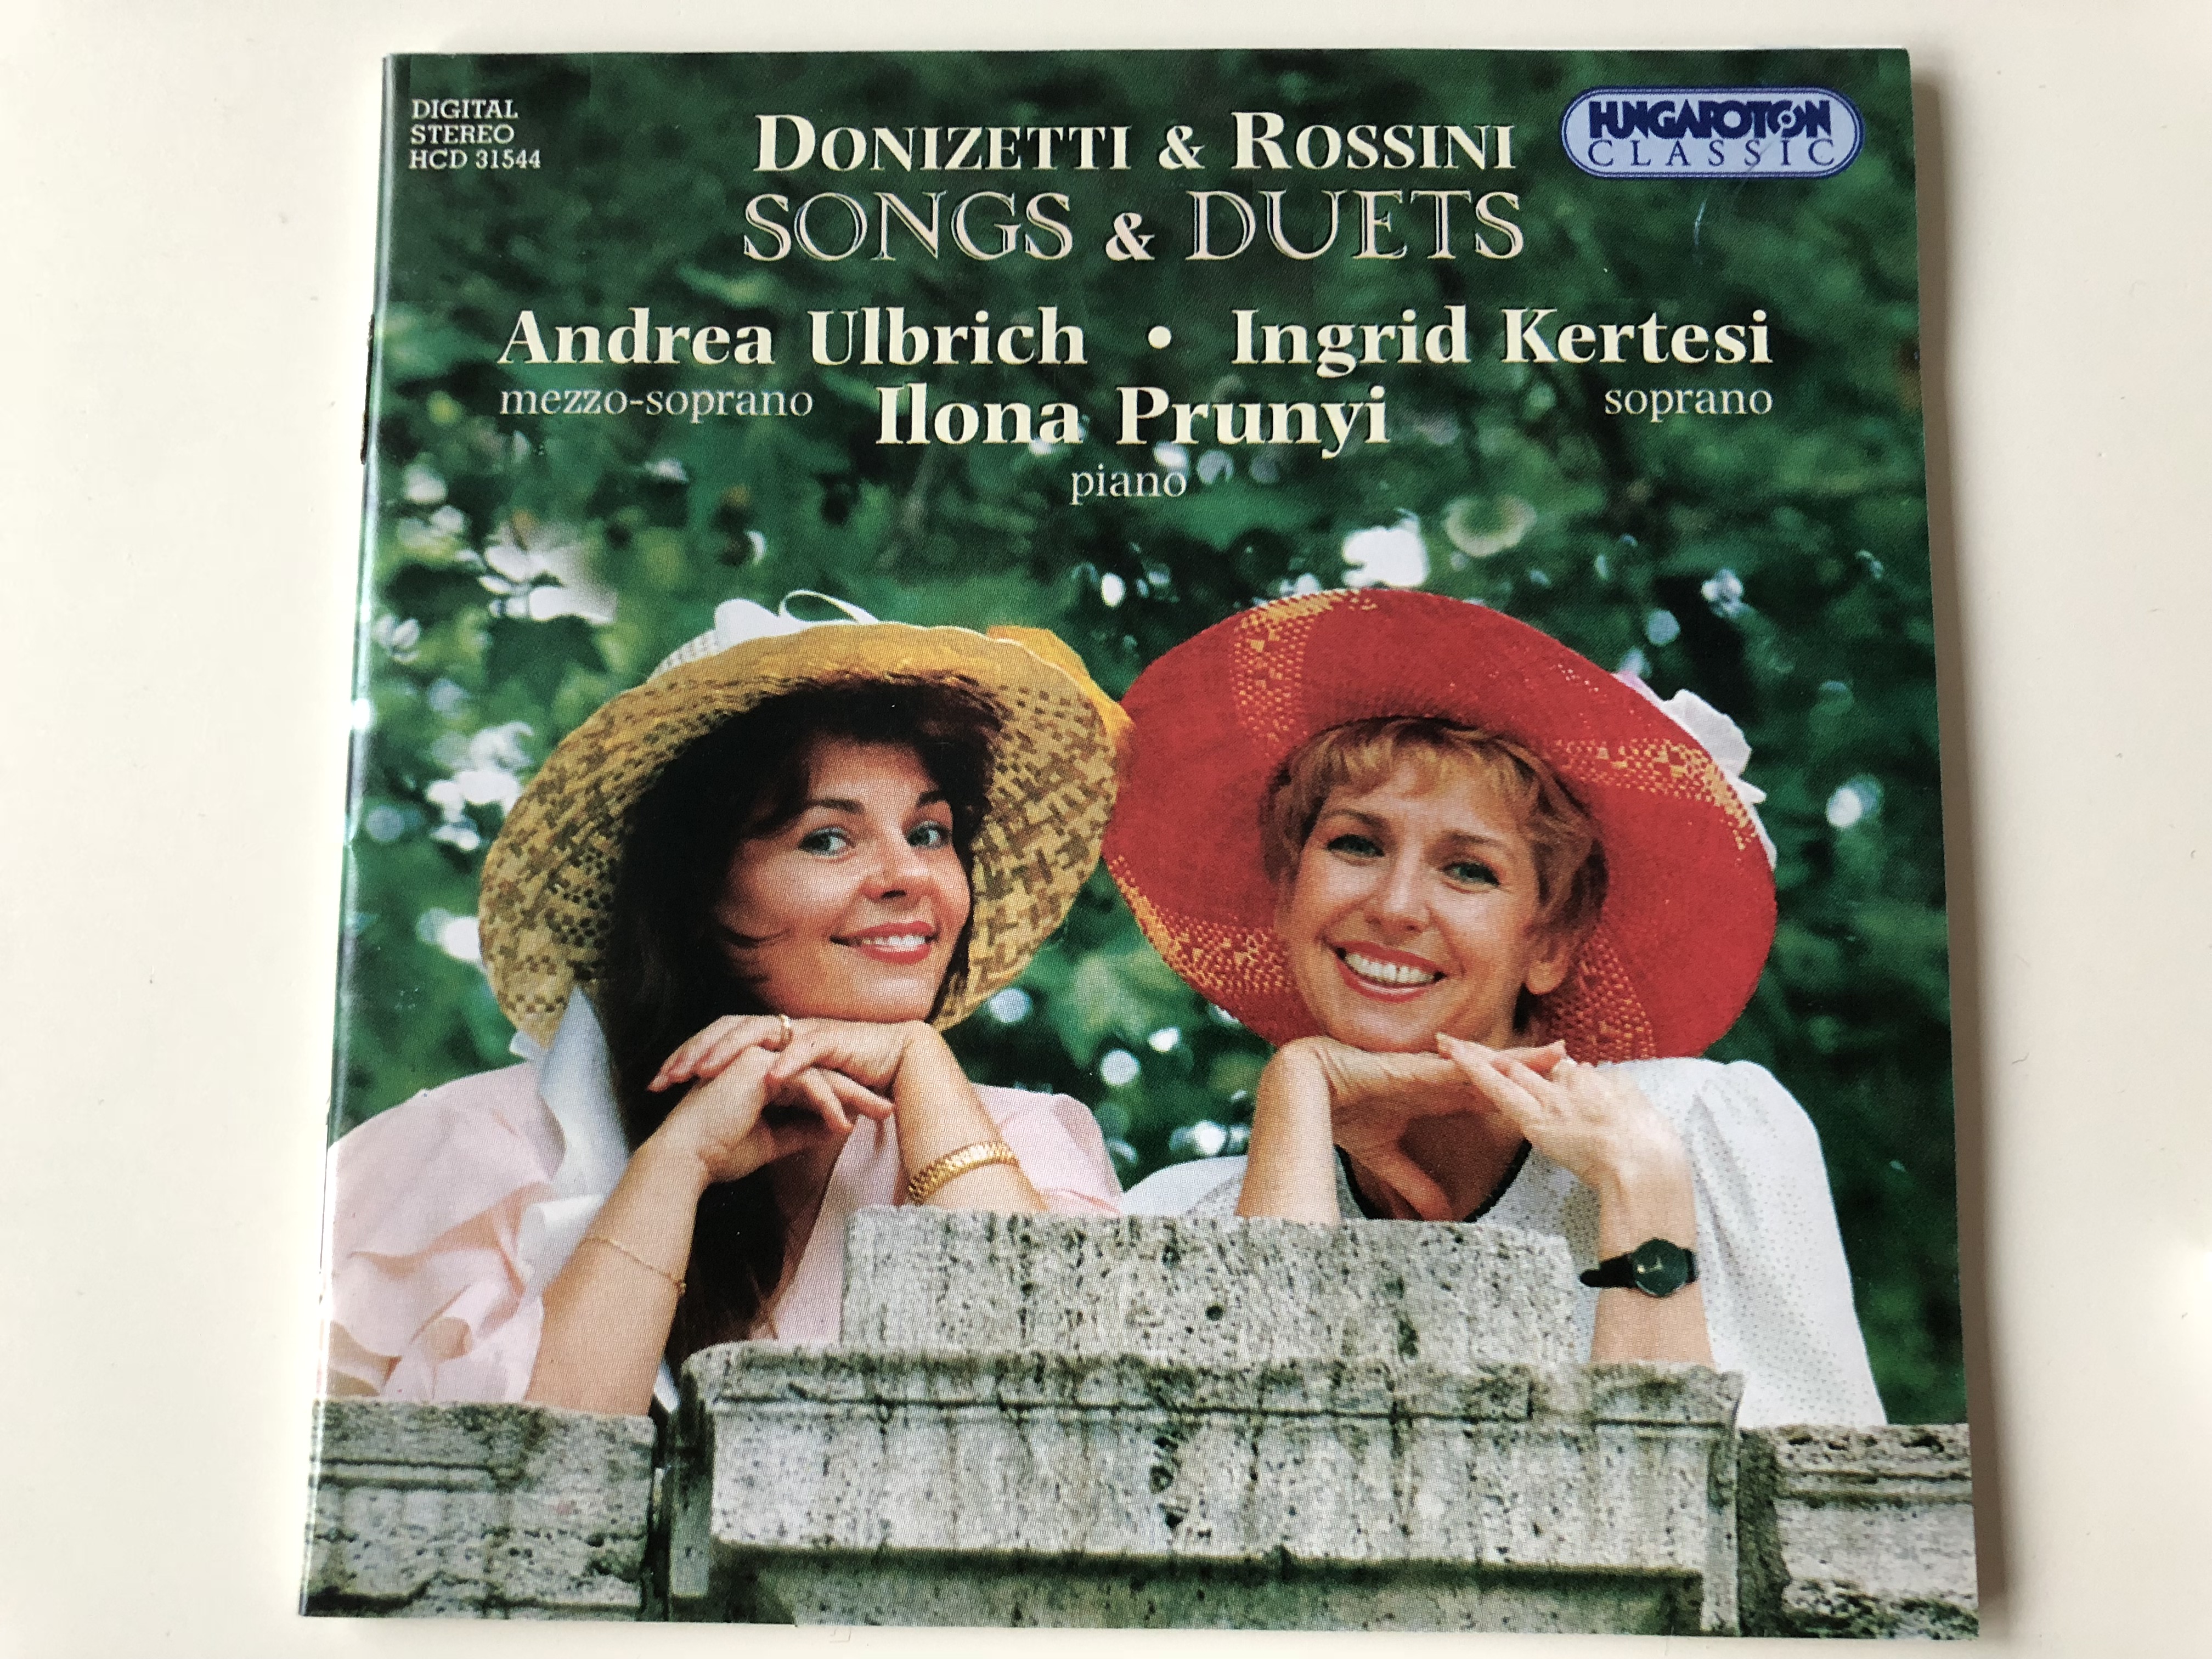 donizetti-rossini-songs-duets-andrea-ulbrich-mezzo-soprano-ingrid-kertesi-soprano-ilona-prunyi-piano-hungaroton-classic-audio-cd-1997-hcd-31544-1-.jpg